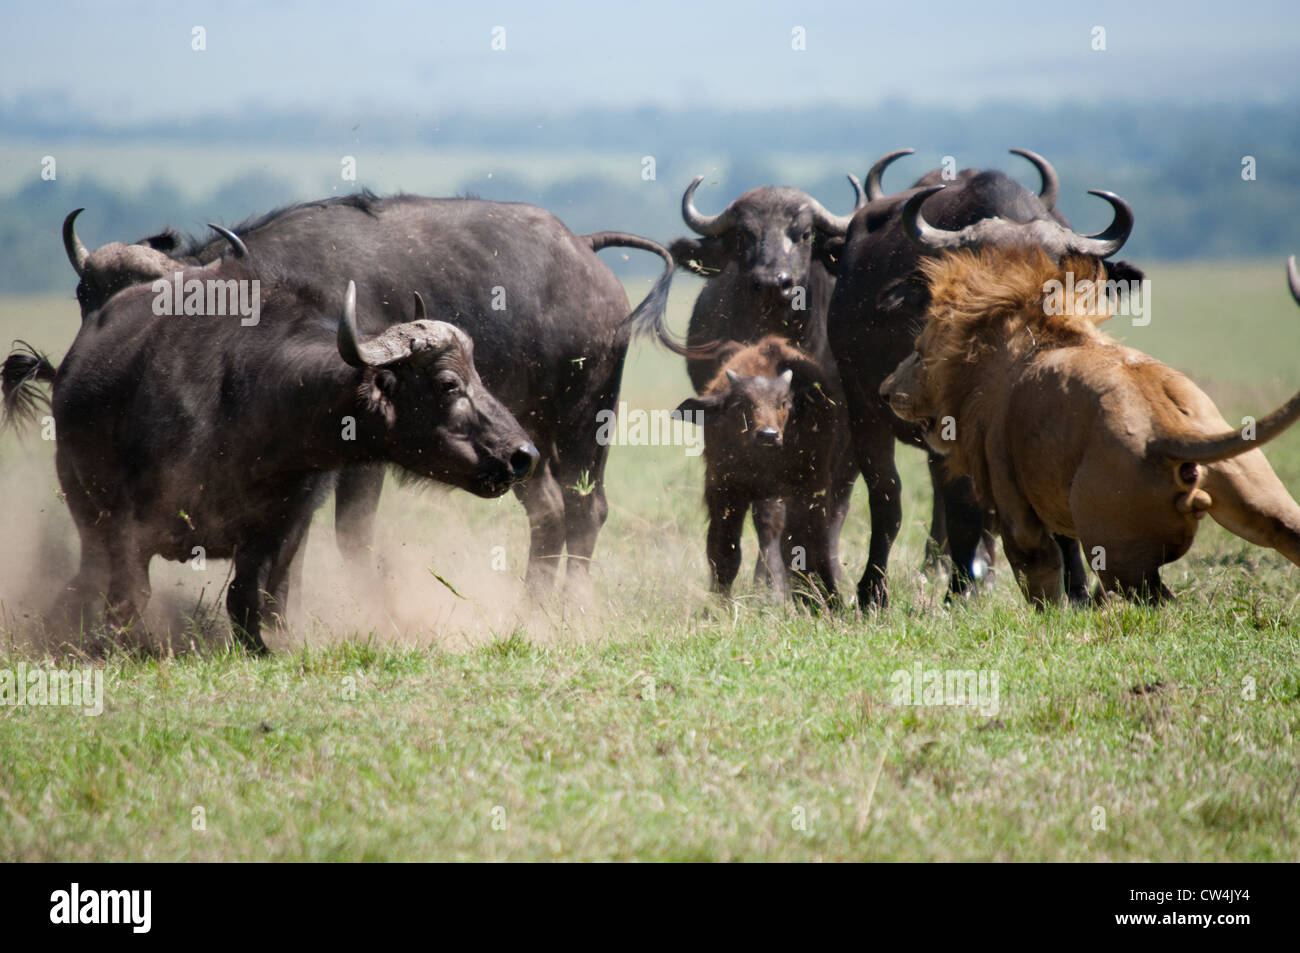 Lions attacking buffalo Stock Photo